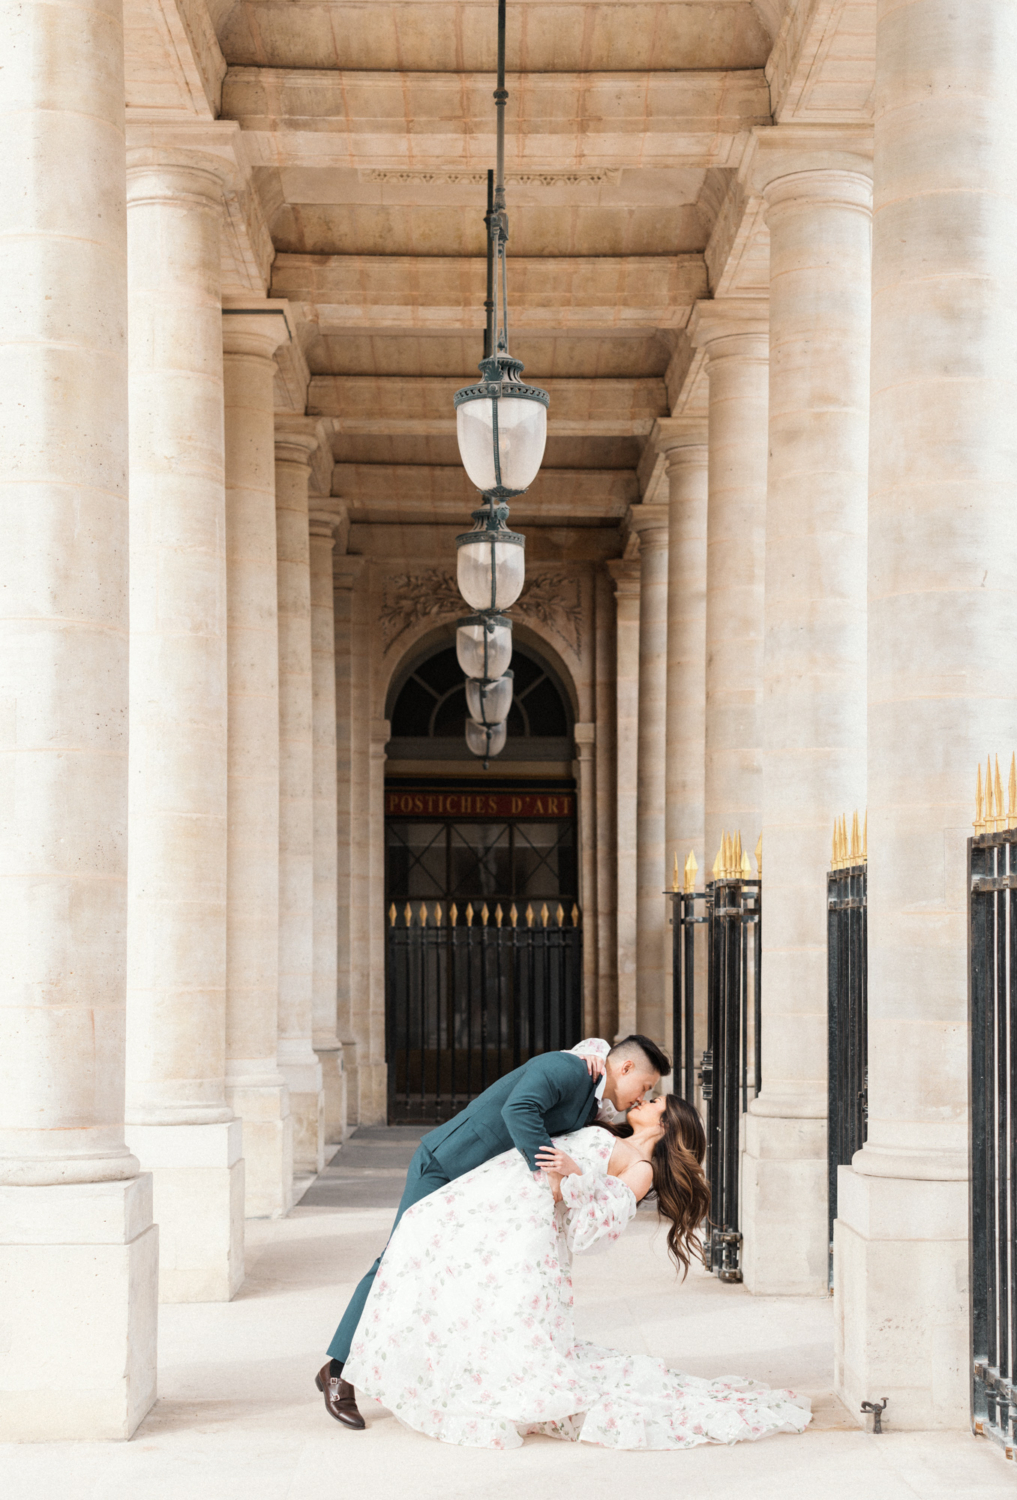 asian couple dance at palais royal in paris france